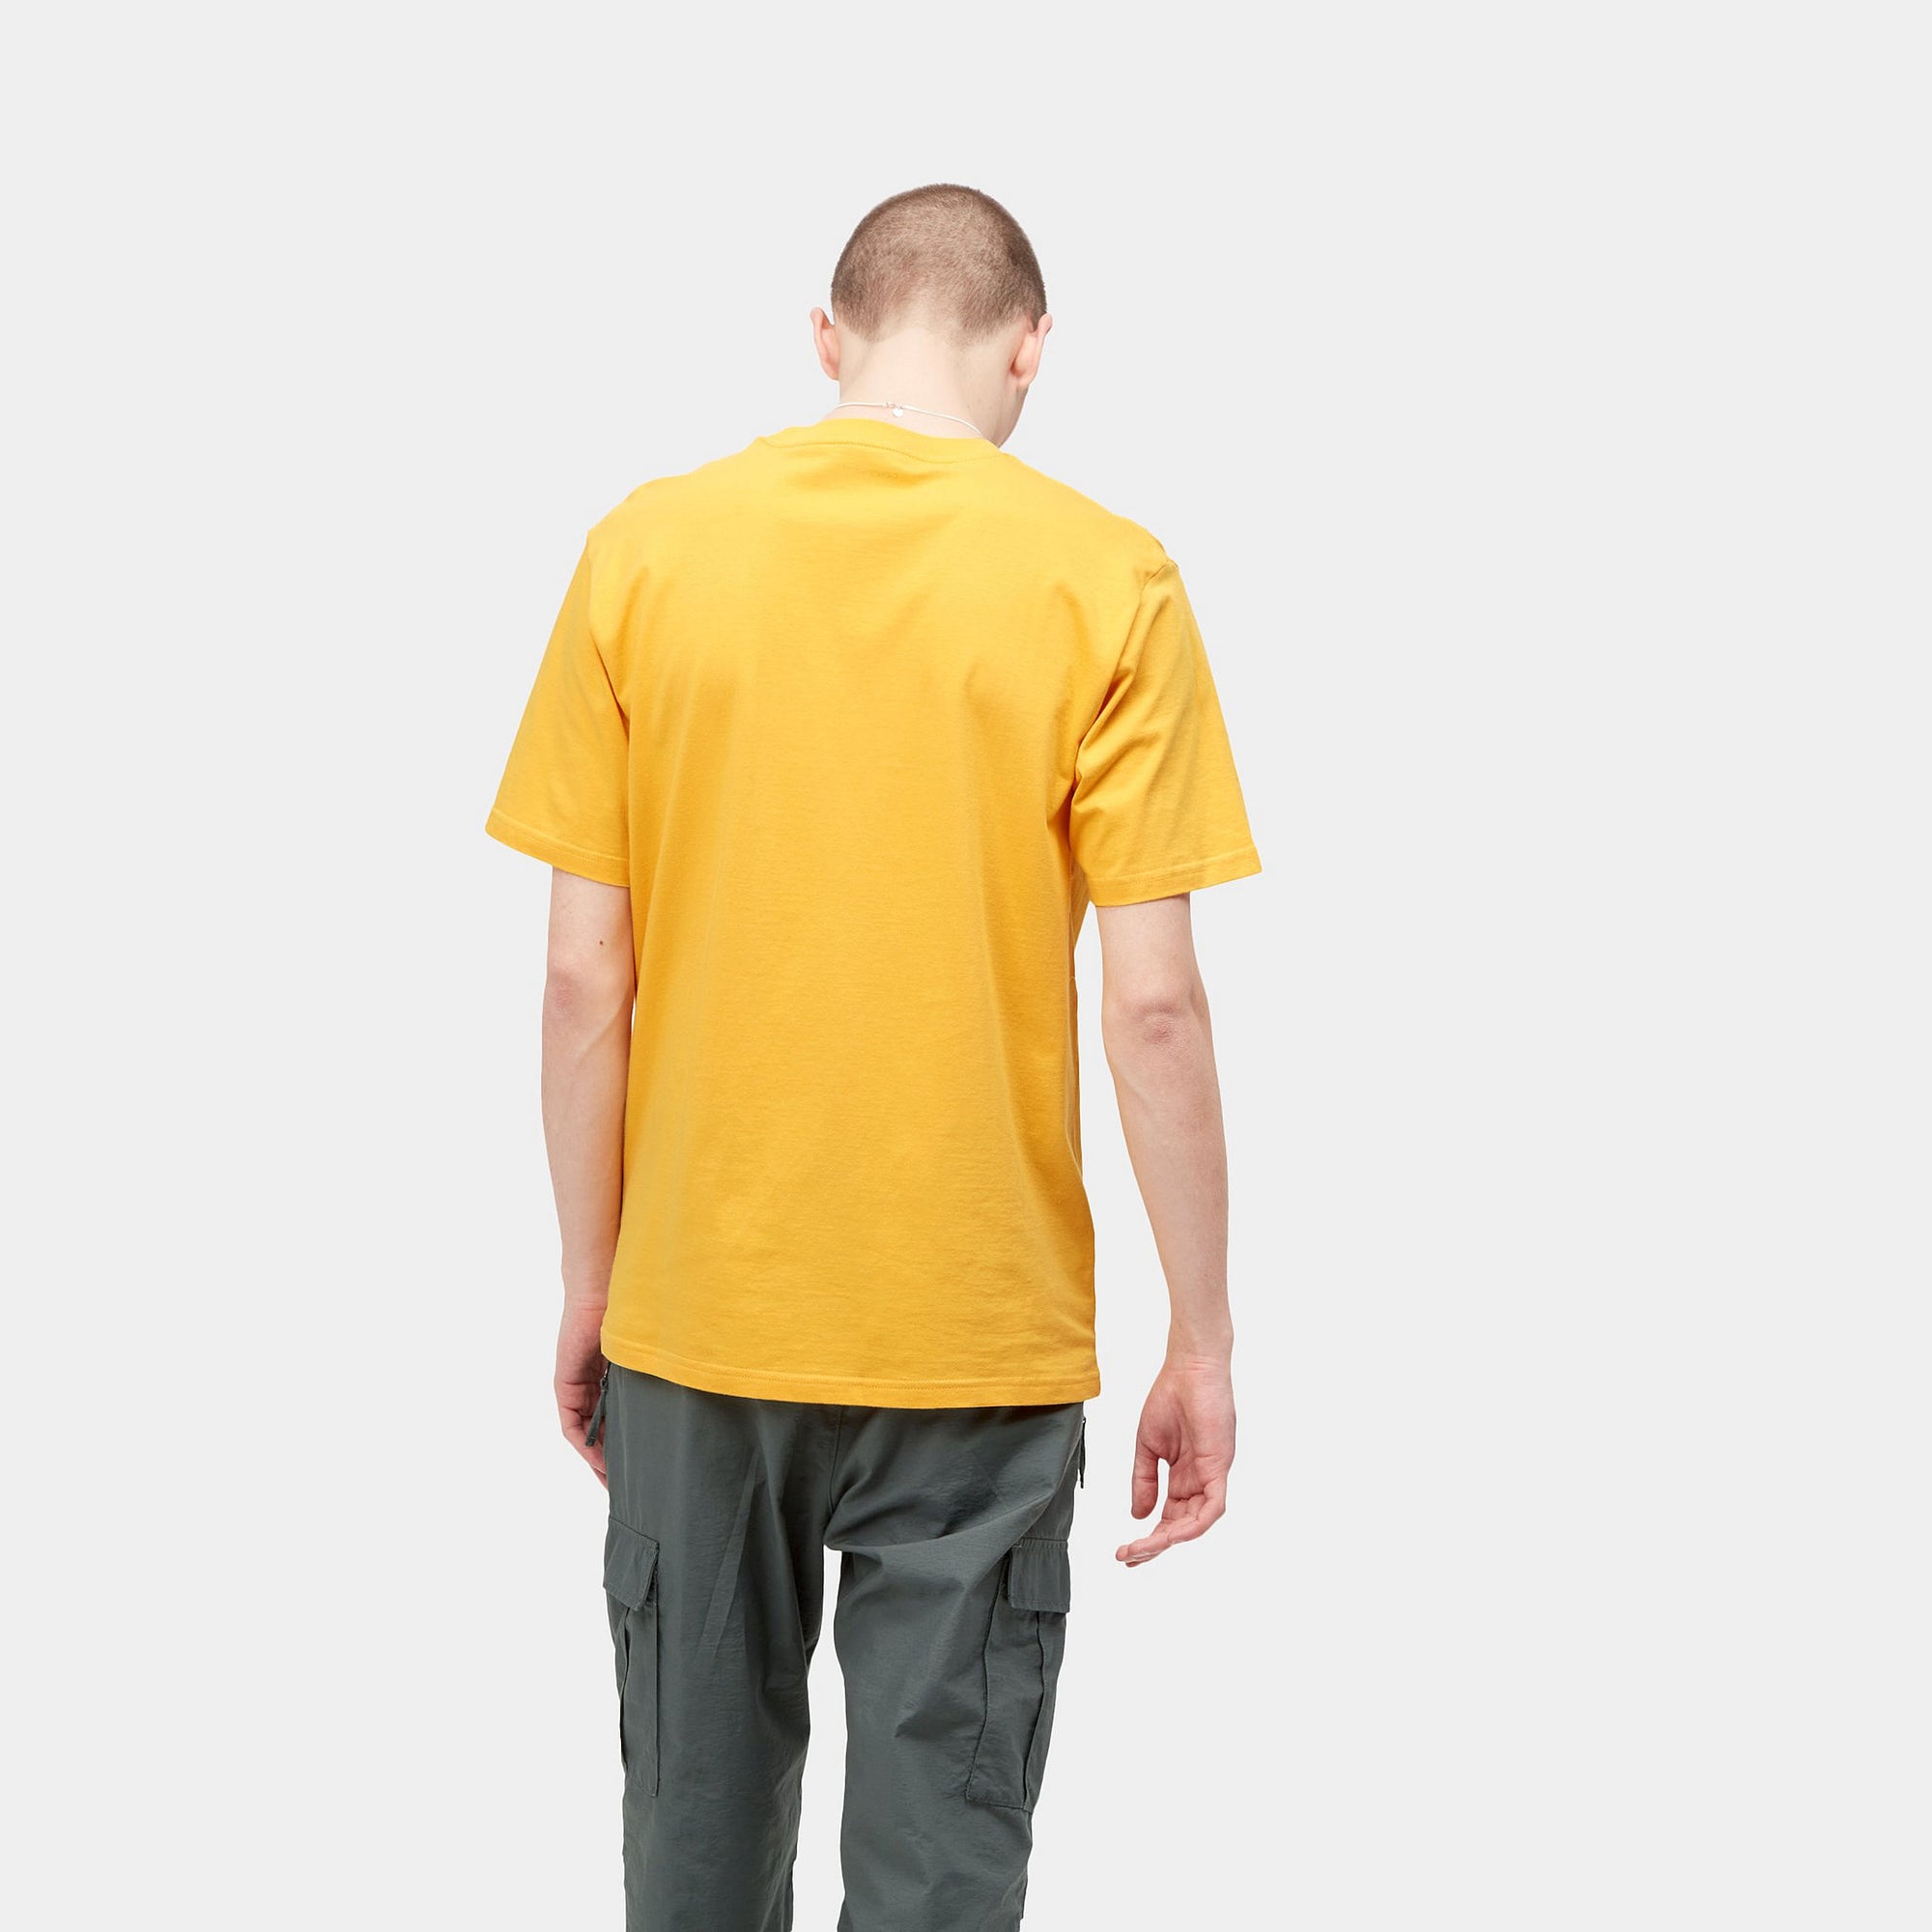 Carhartt T-shirt uomo manica corta Jousting I030195 15 yellow